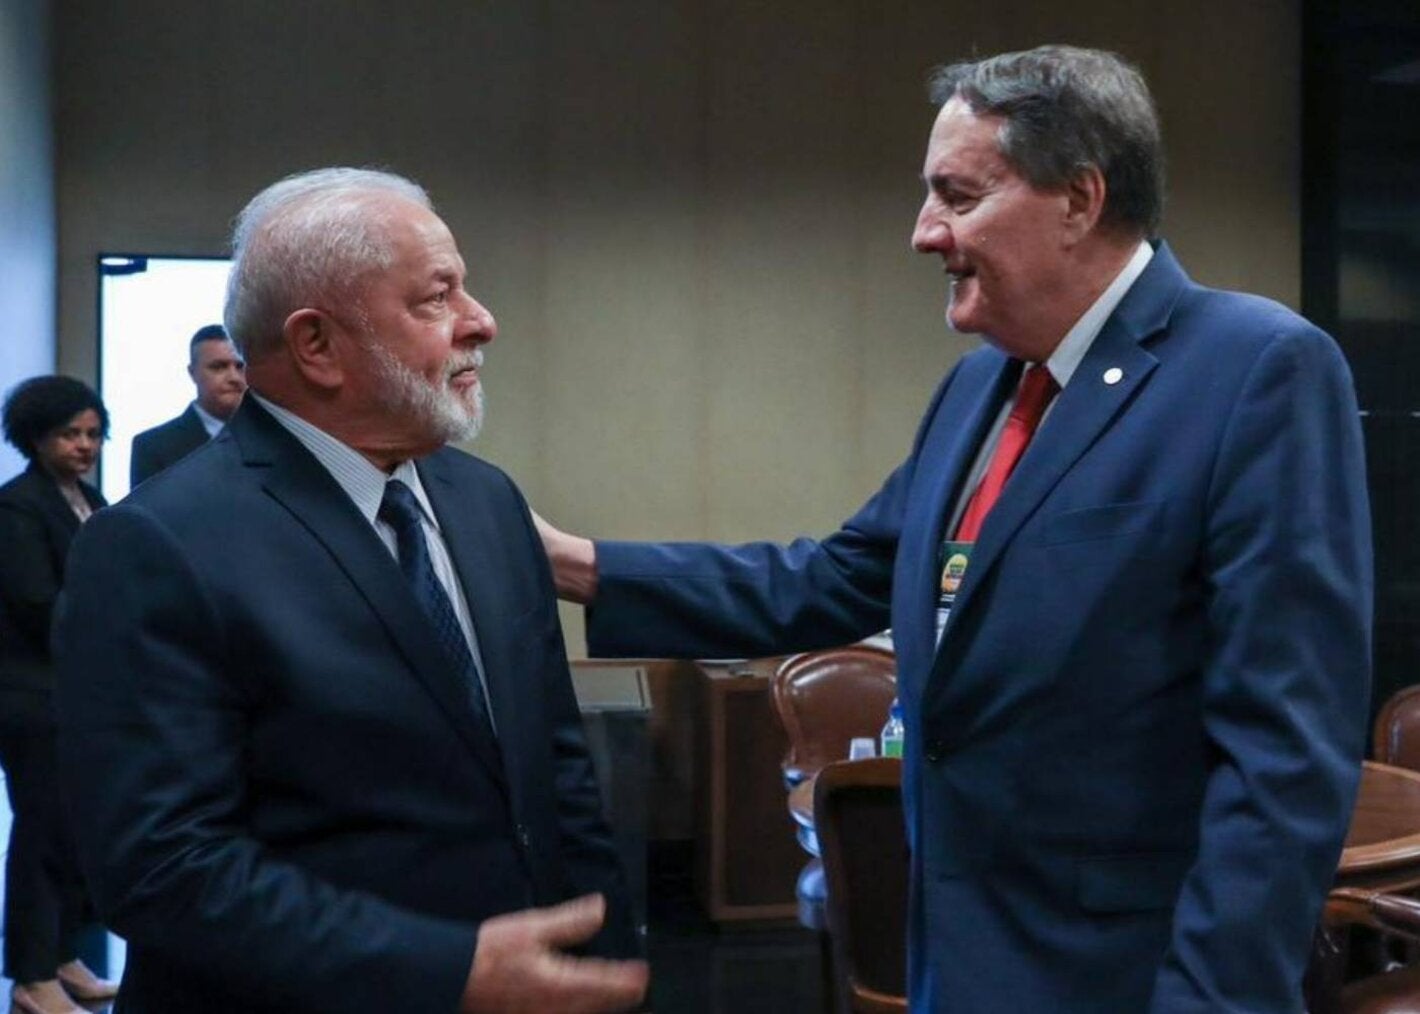 Dr. Jarbas Barbosa and President Luiz Inácio Lula da Silva of Brazil